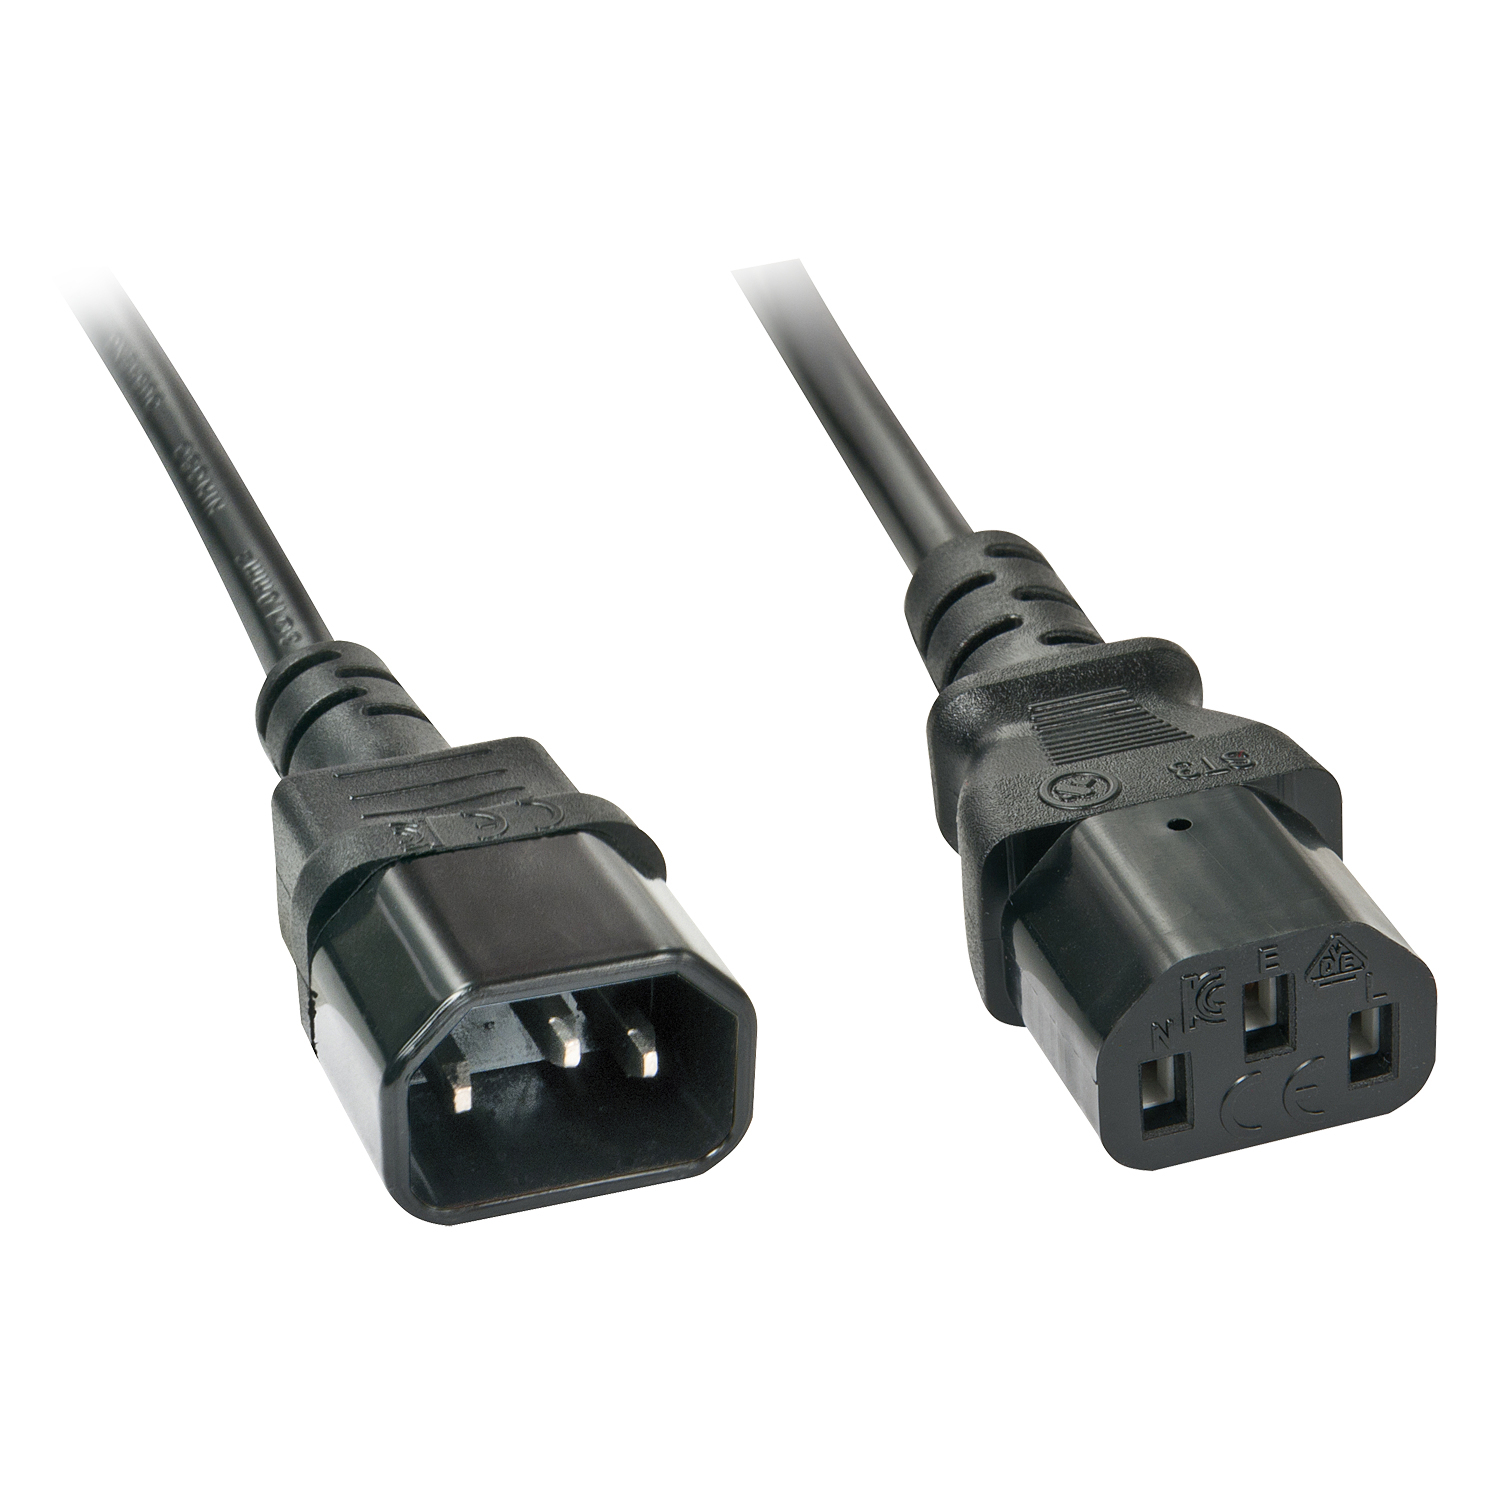 2m Iec Ext Cable Iec C14 To Iec C13 30331 - WC01